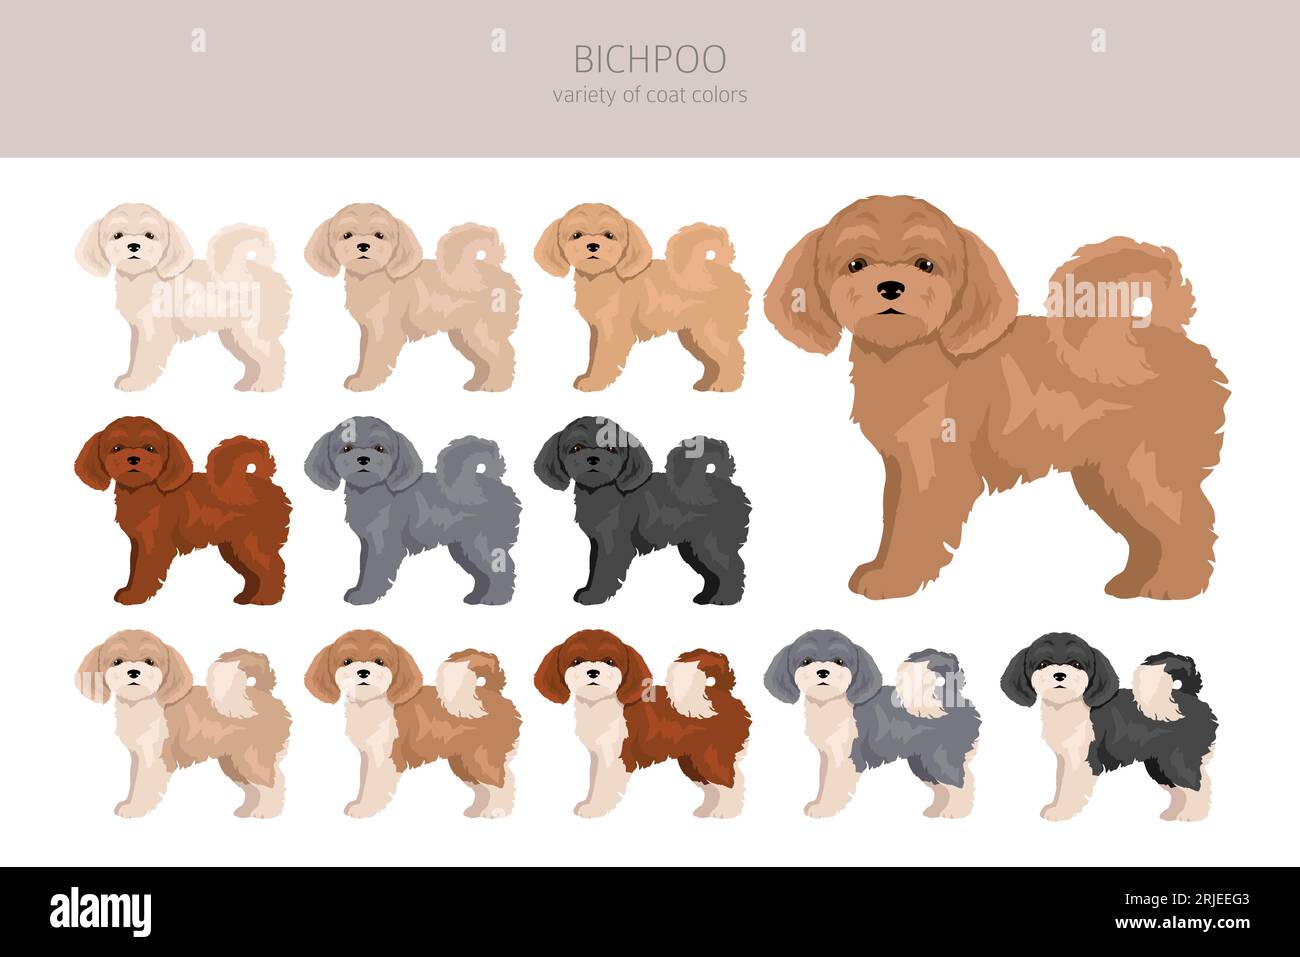 Bichpoo, Poochon clipart. Bichon Frise Poodle mix. Different coat colors set.  Vector illustration Stock Vector